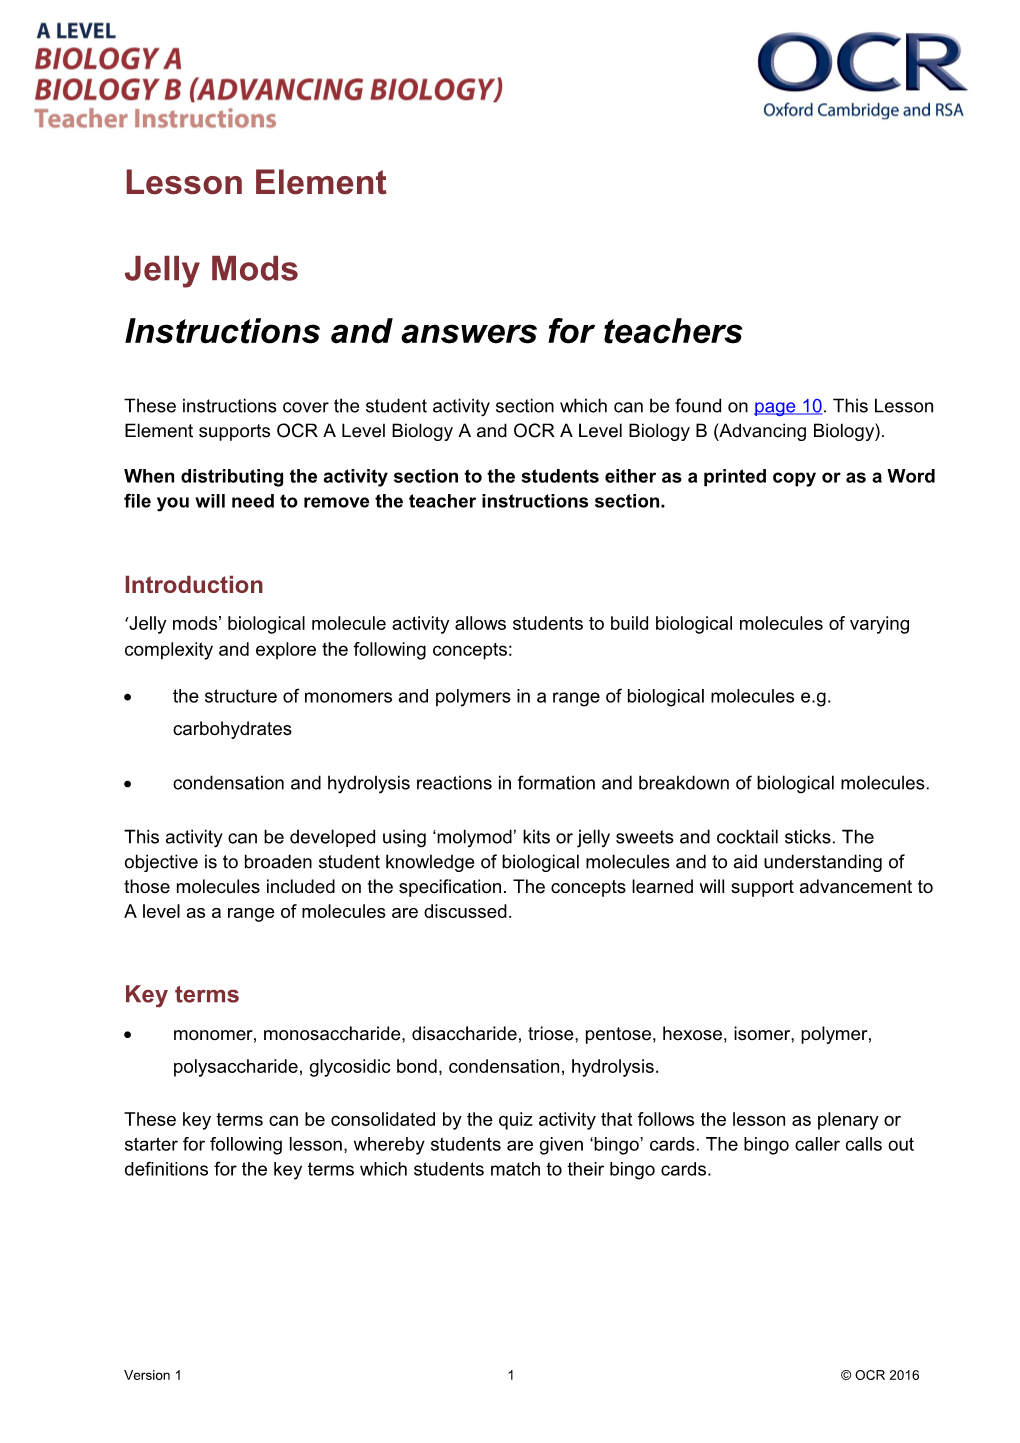 OCR a Level Biology a Biology B (Advancing Biology) Lesson Element - Jelly Mods